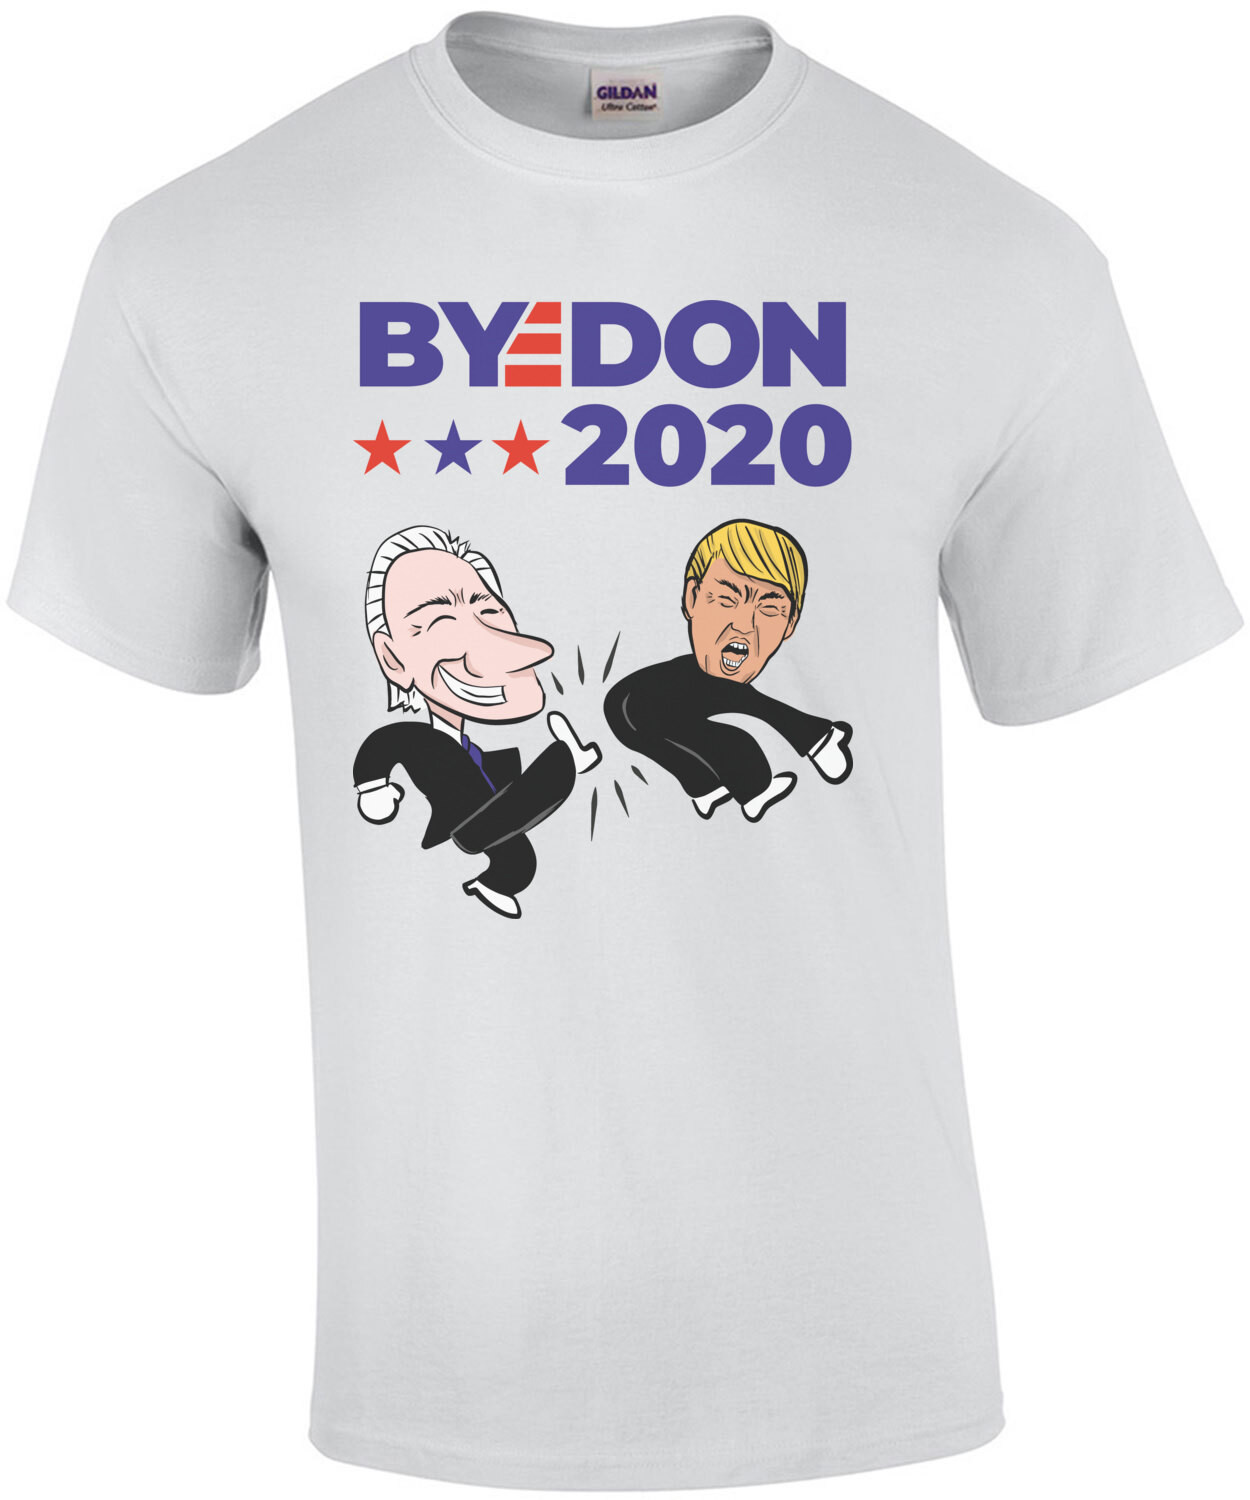 Biden - Byedon 2020 - Pro- Biden Anti-Trump Political T-Shirt